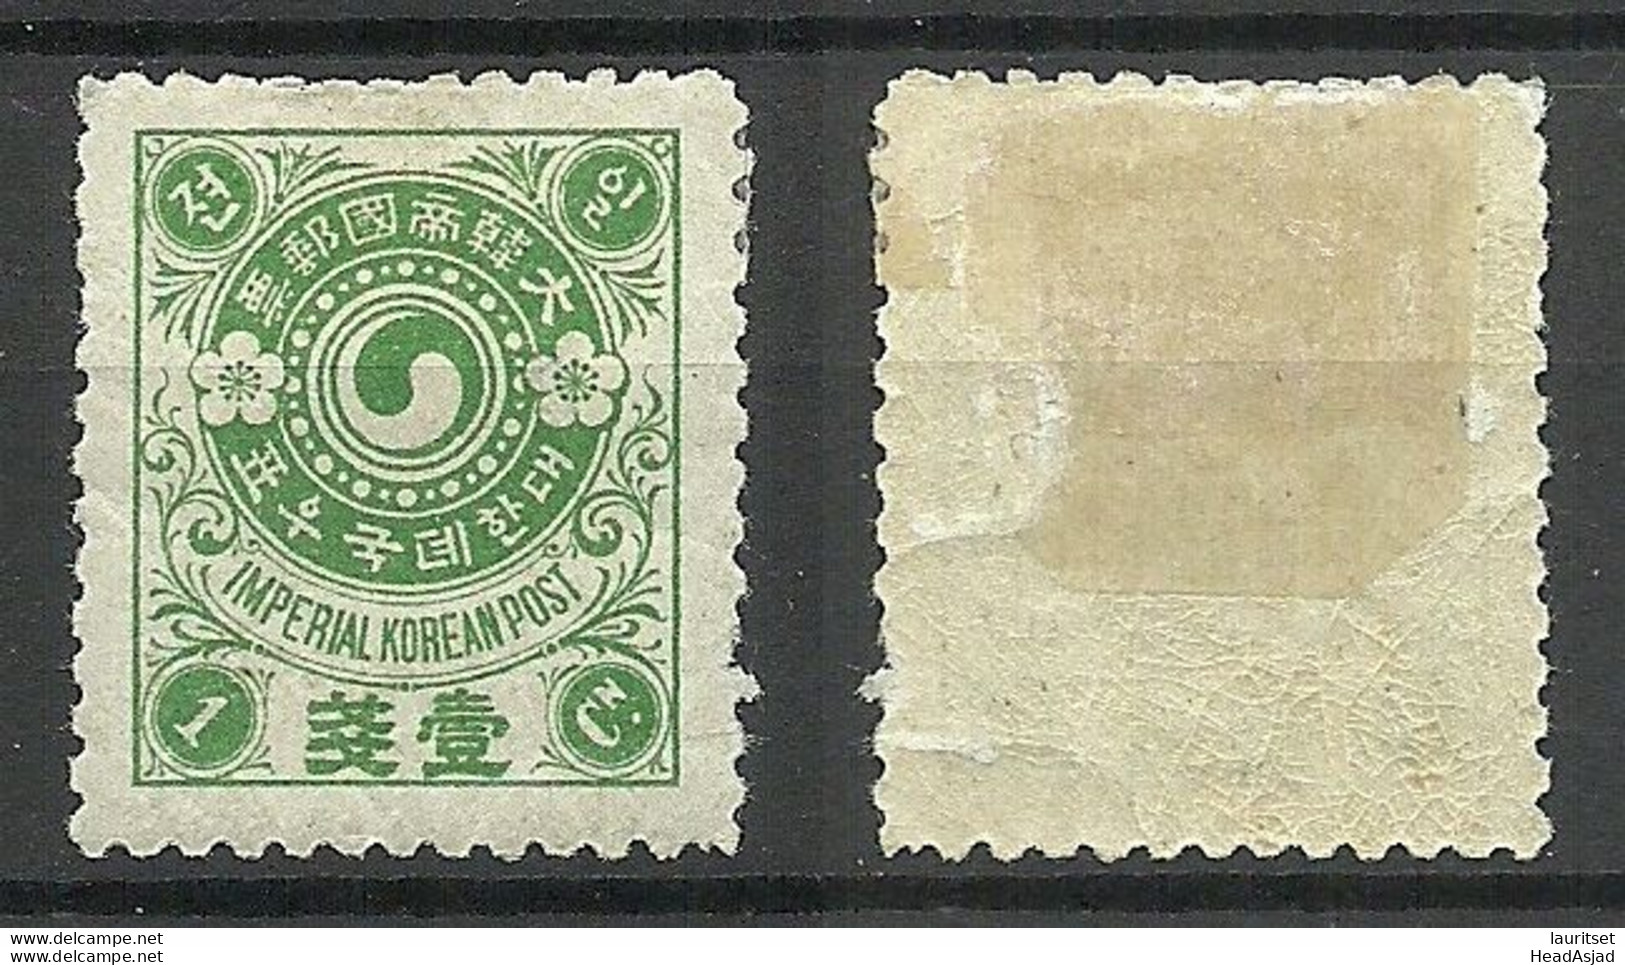 Korea 1900 Michel 14 * - Corée (...-1945)